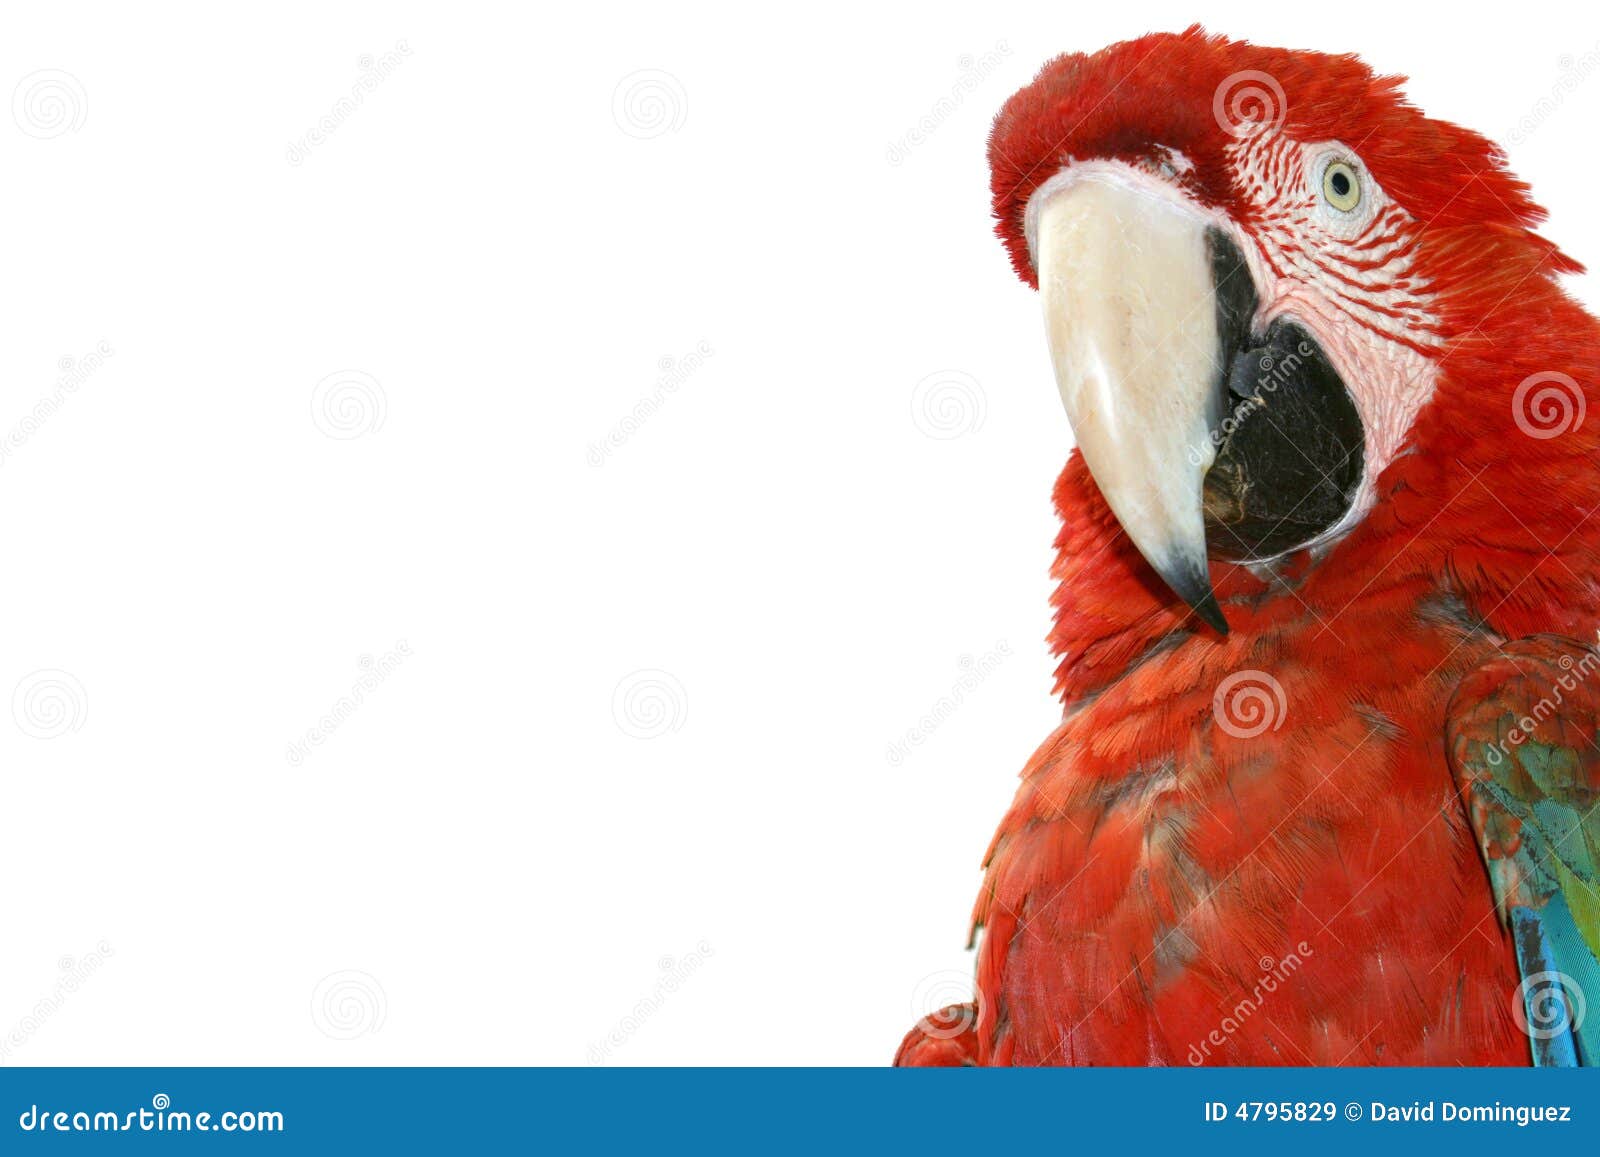 macaw on white background